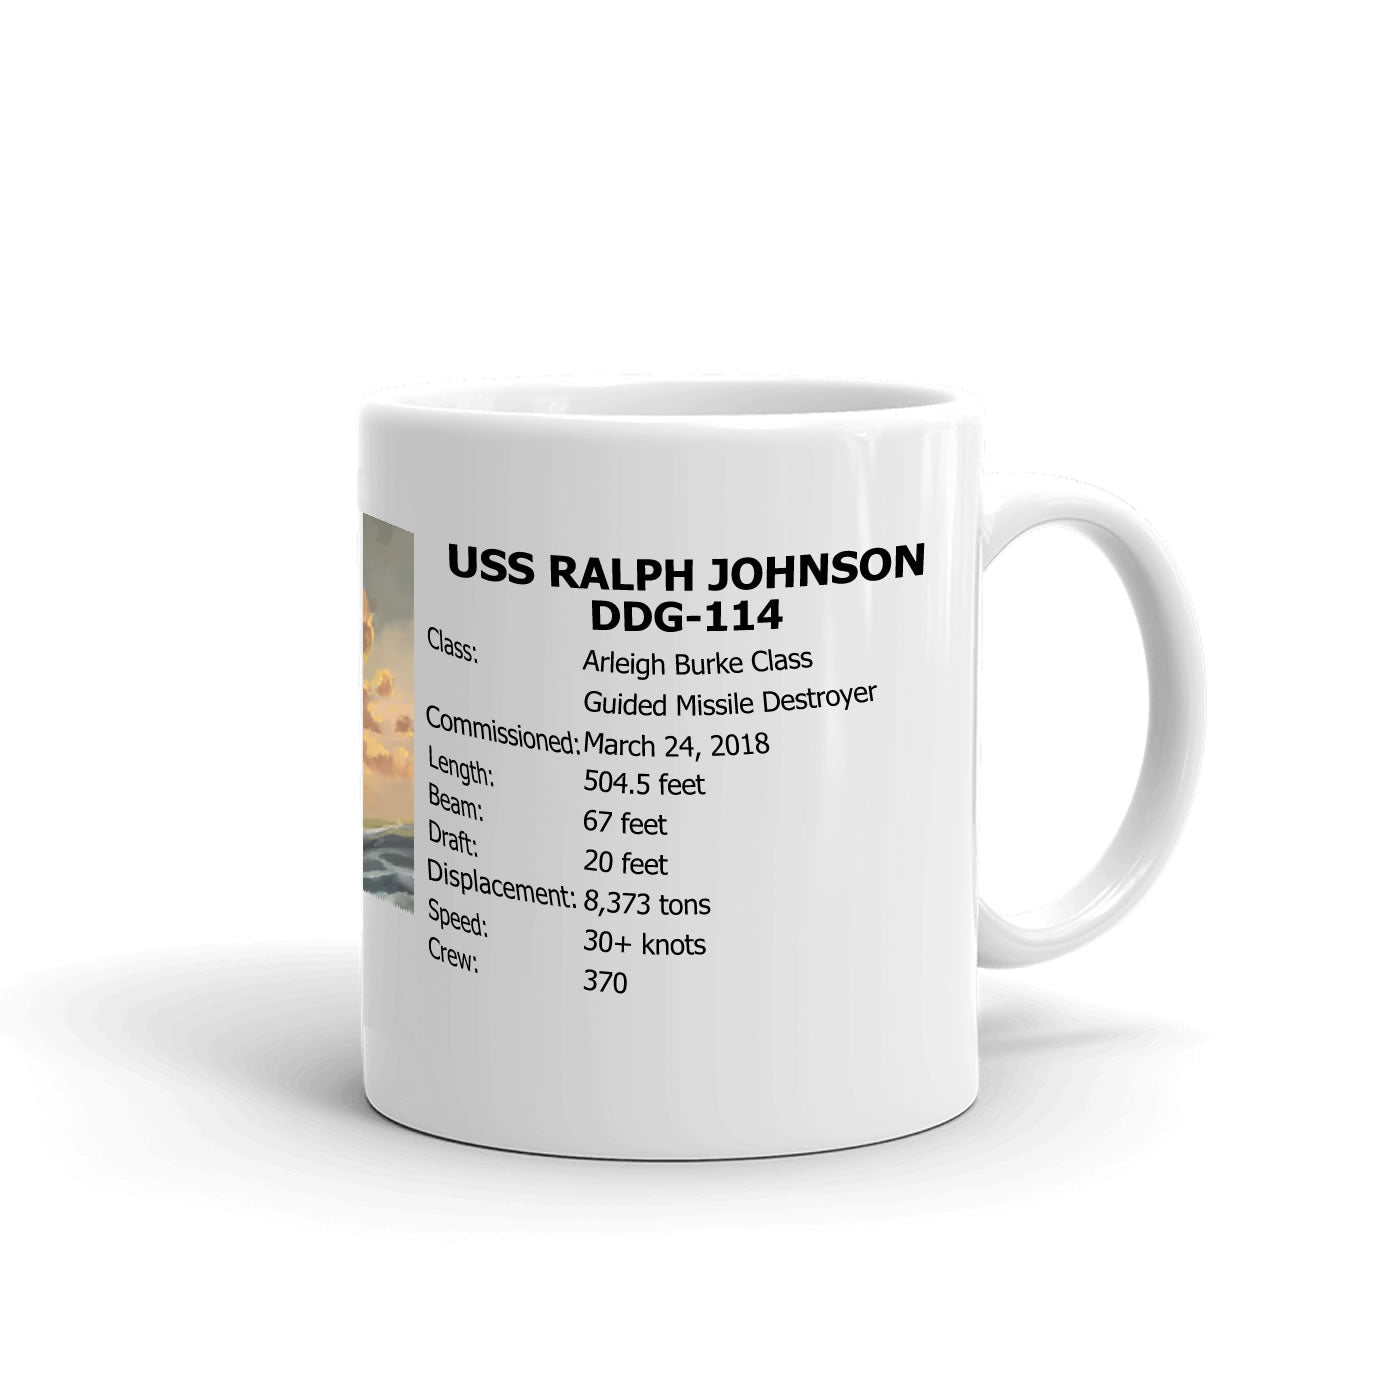 USS Ralph Johnson DDG-114 Coffee Cup Mug Right Handle